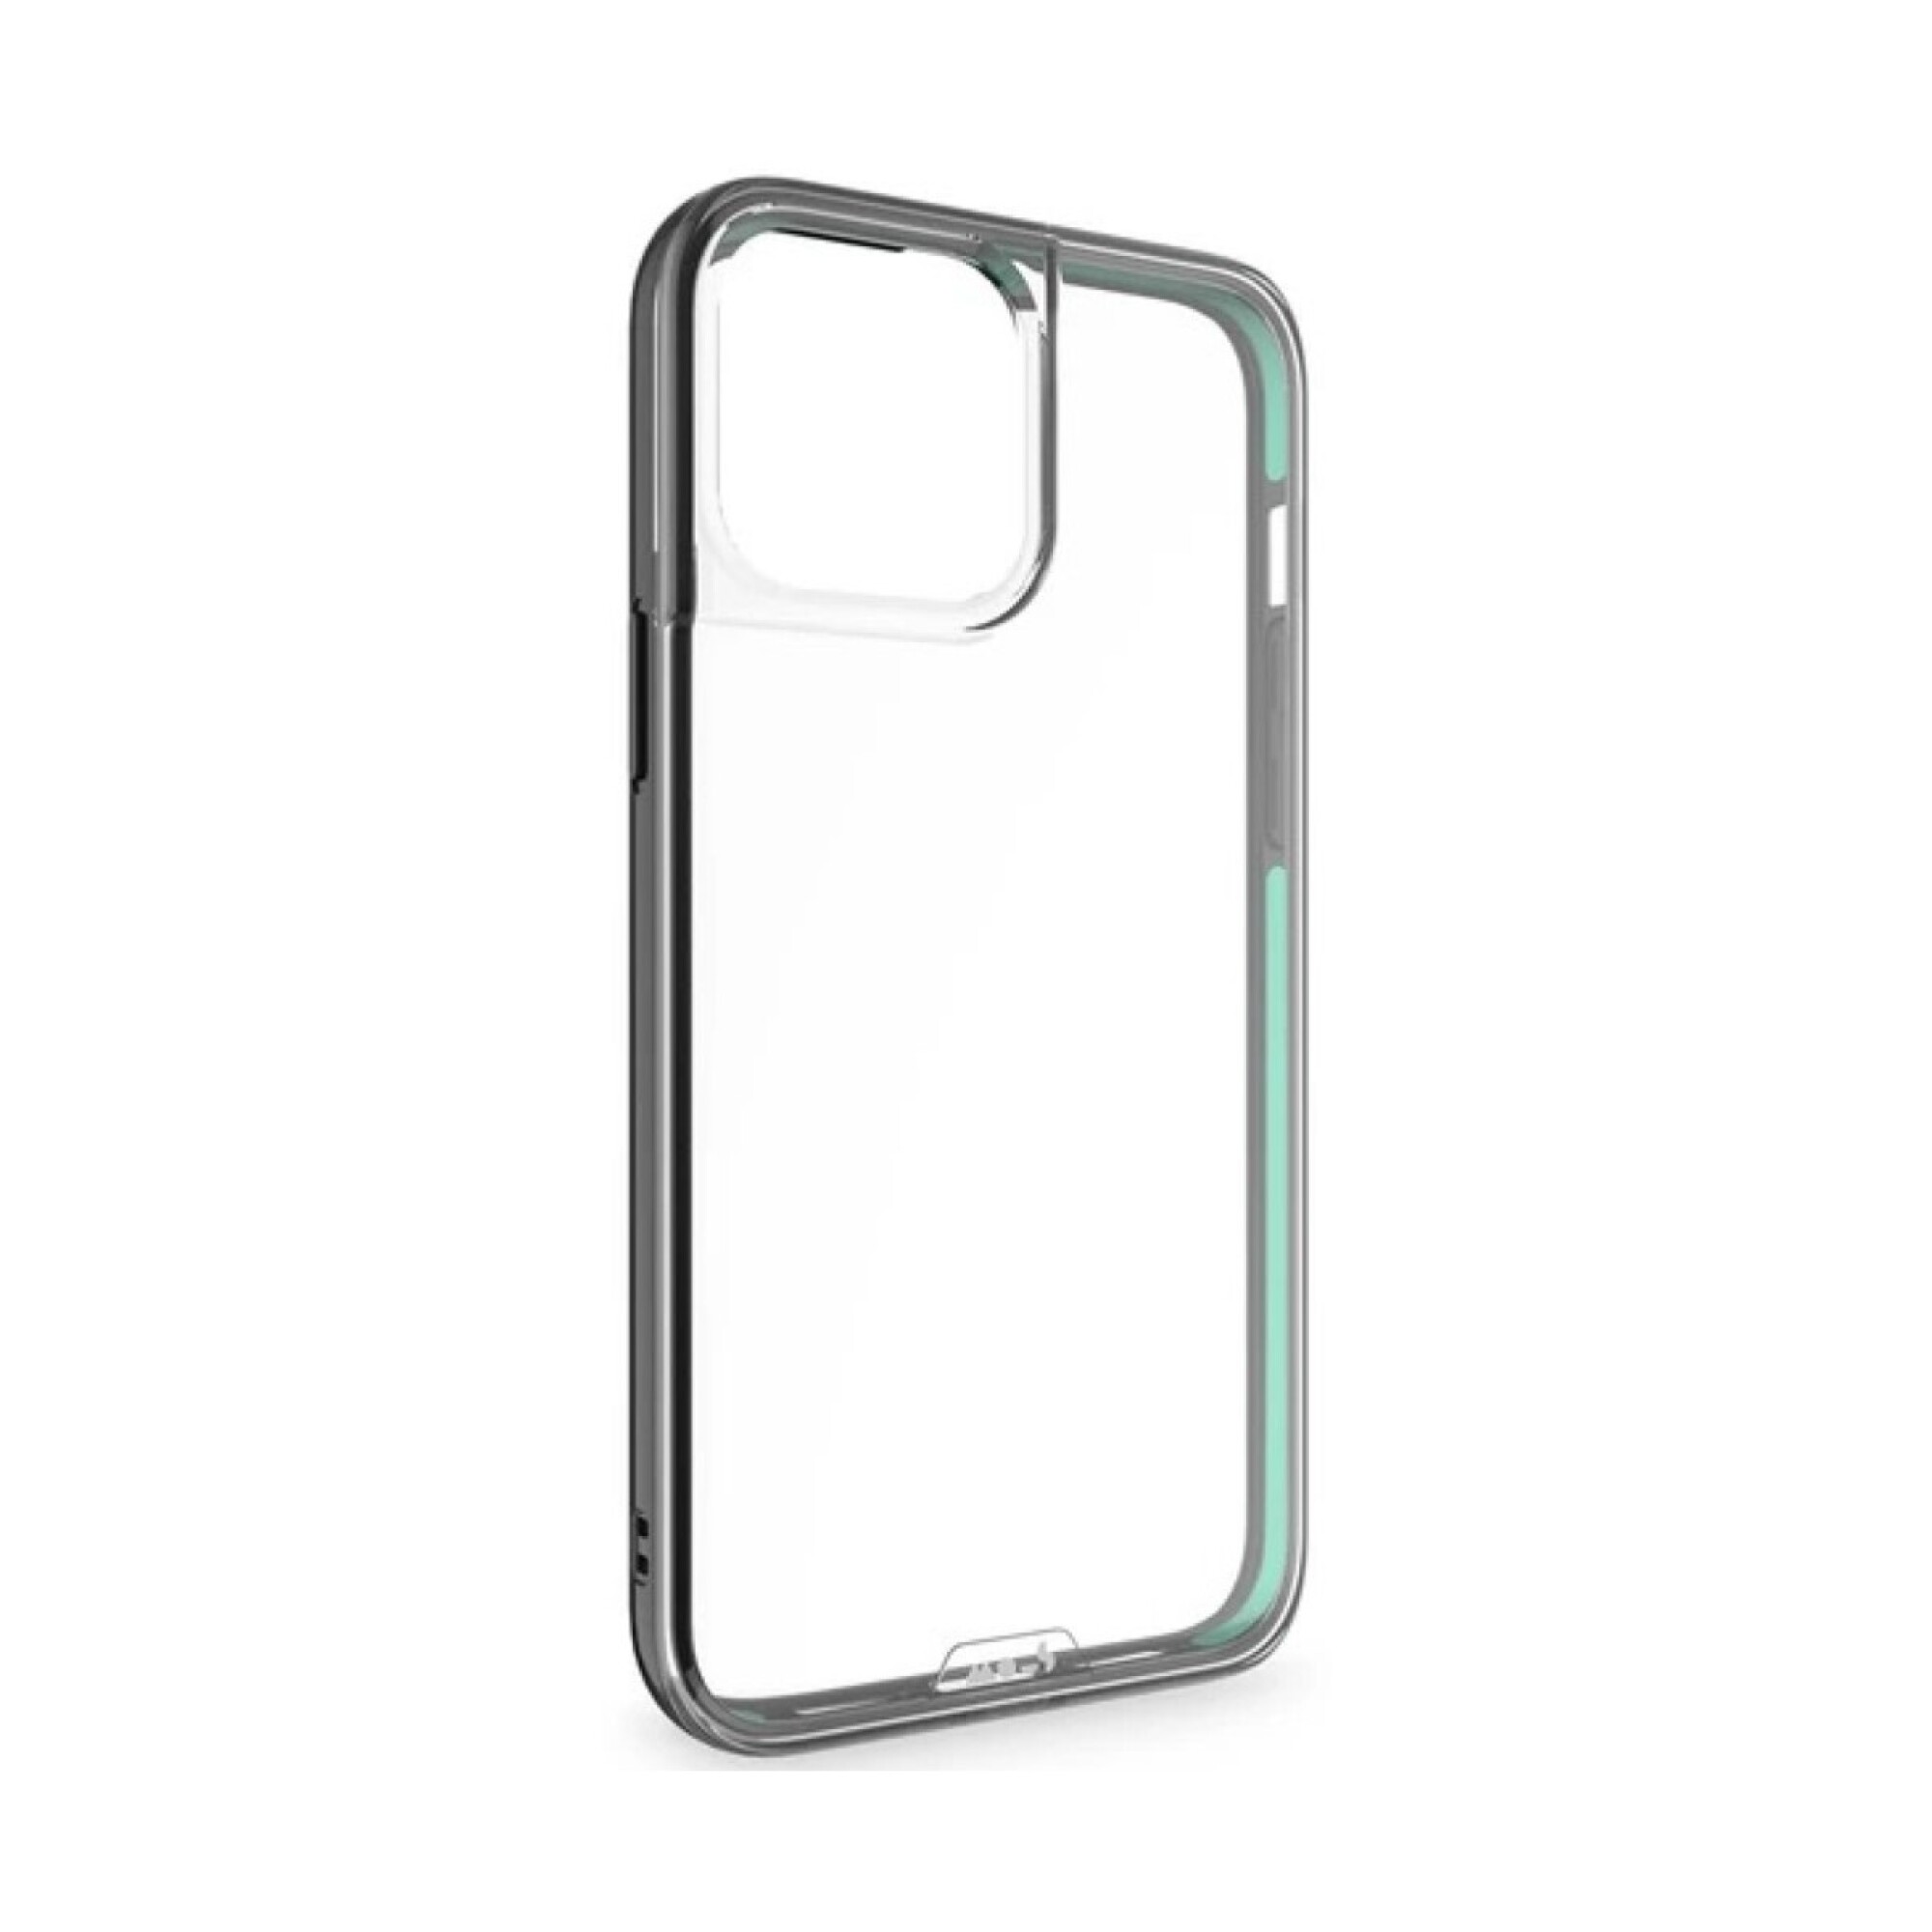 Carcasa color transparente iphone 13 pro max